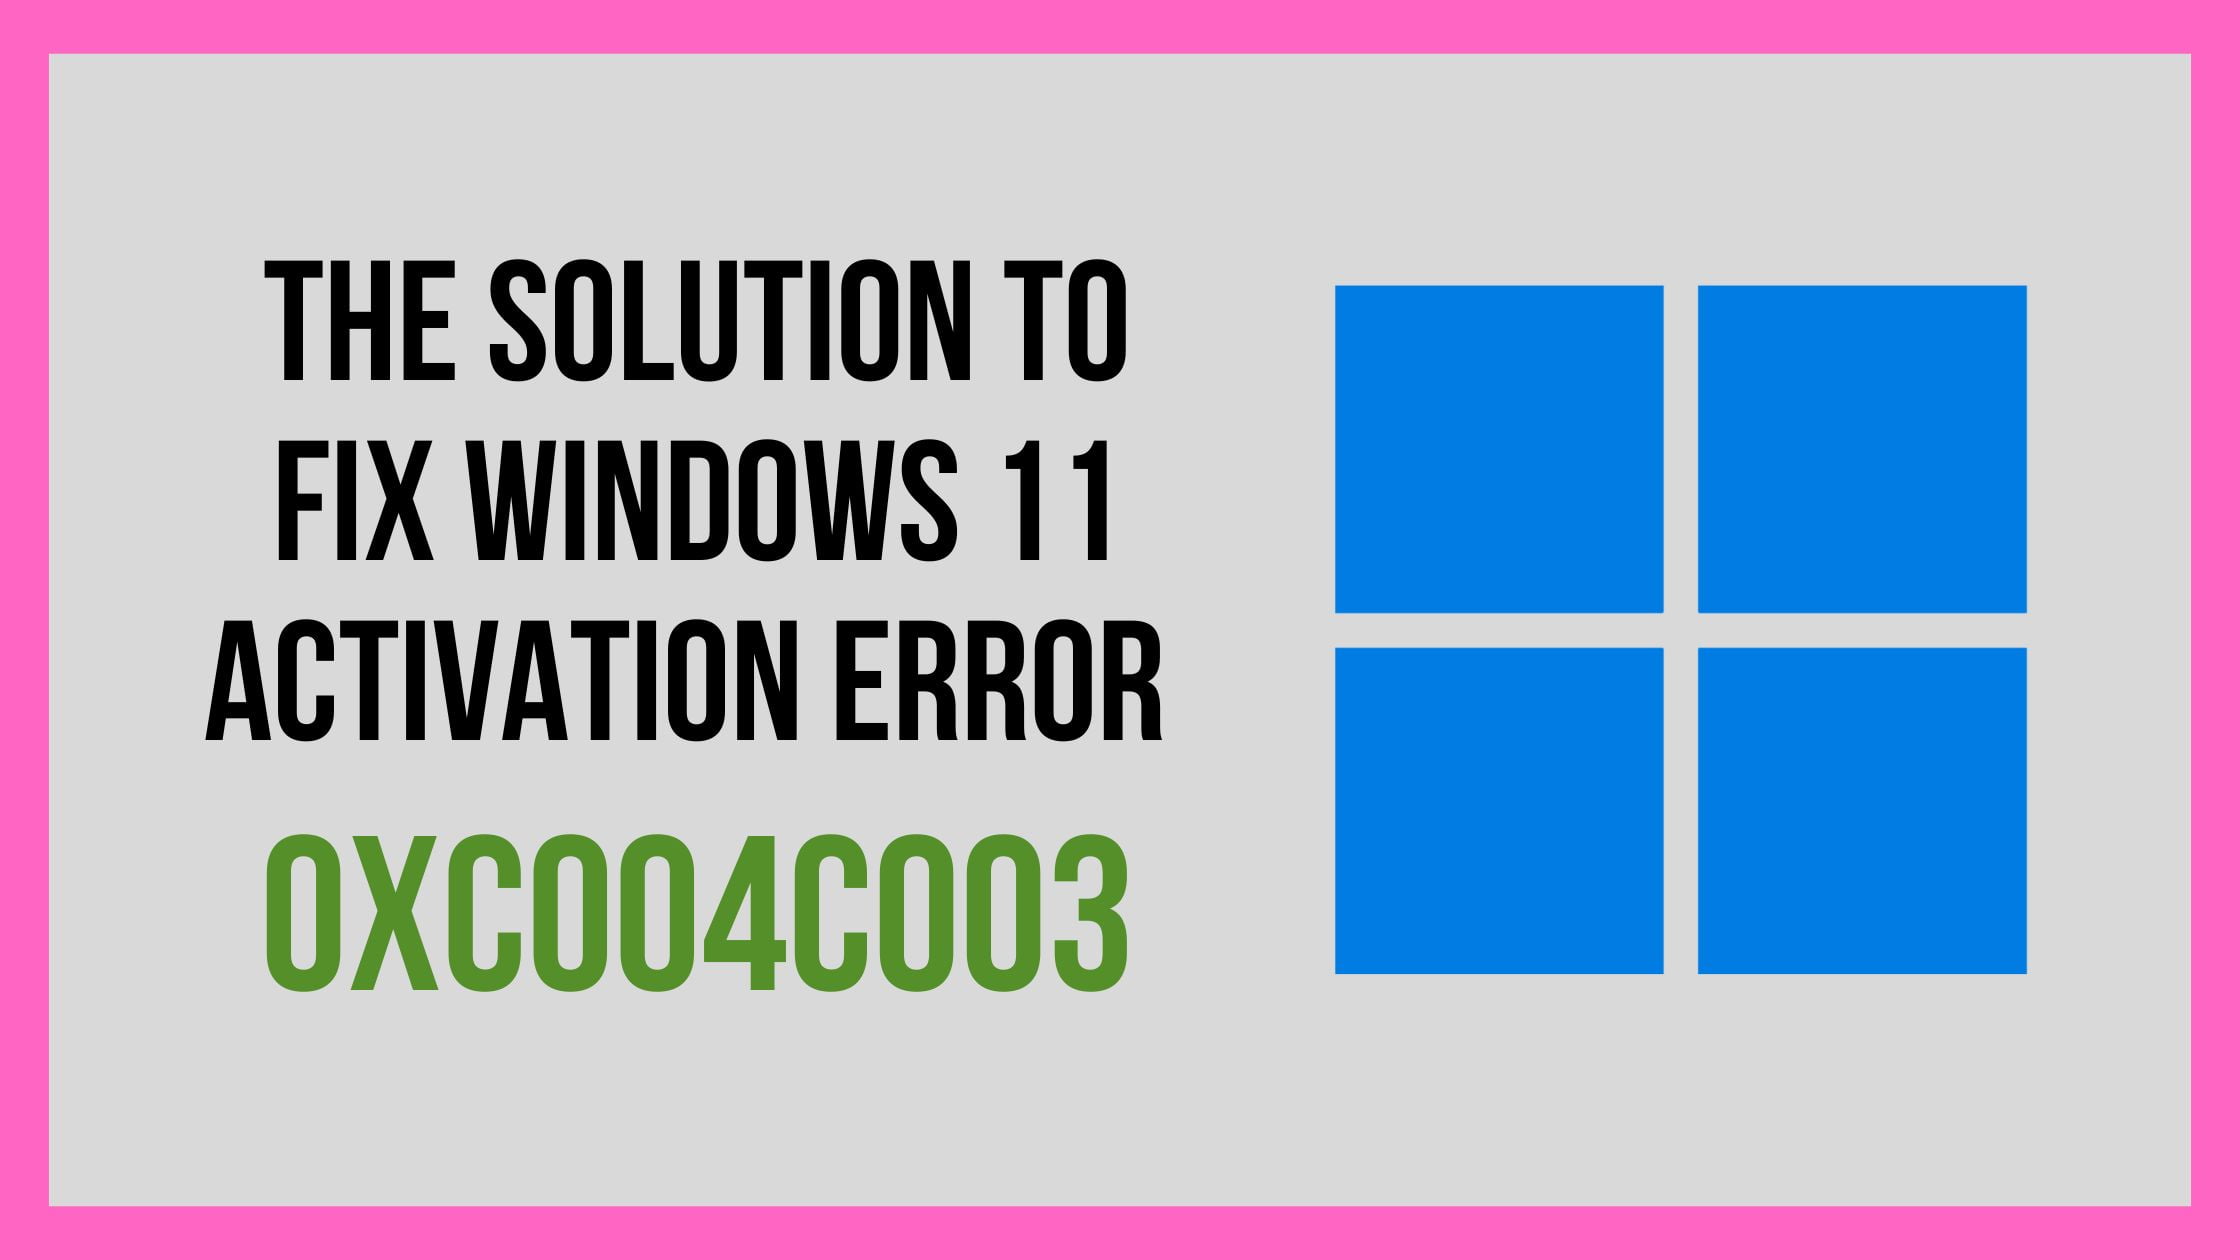 The solution to Fix Windows 11 Activation Error 0xC004C003